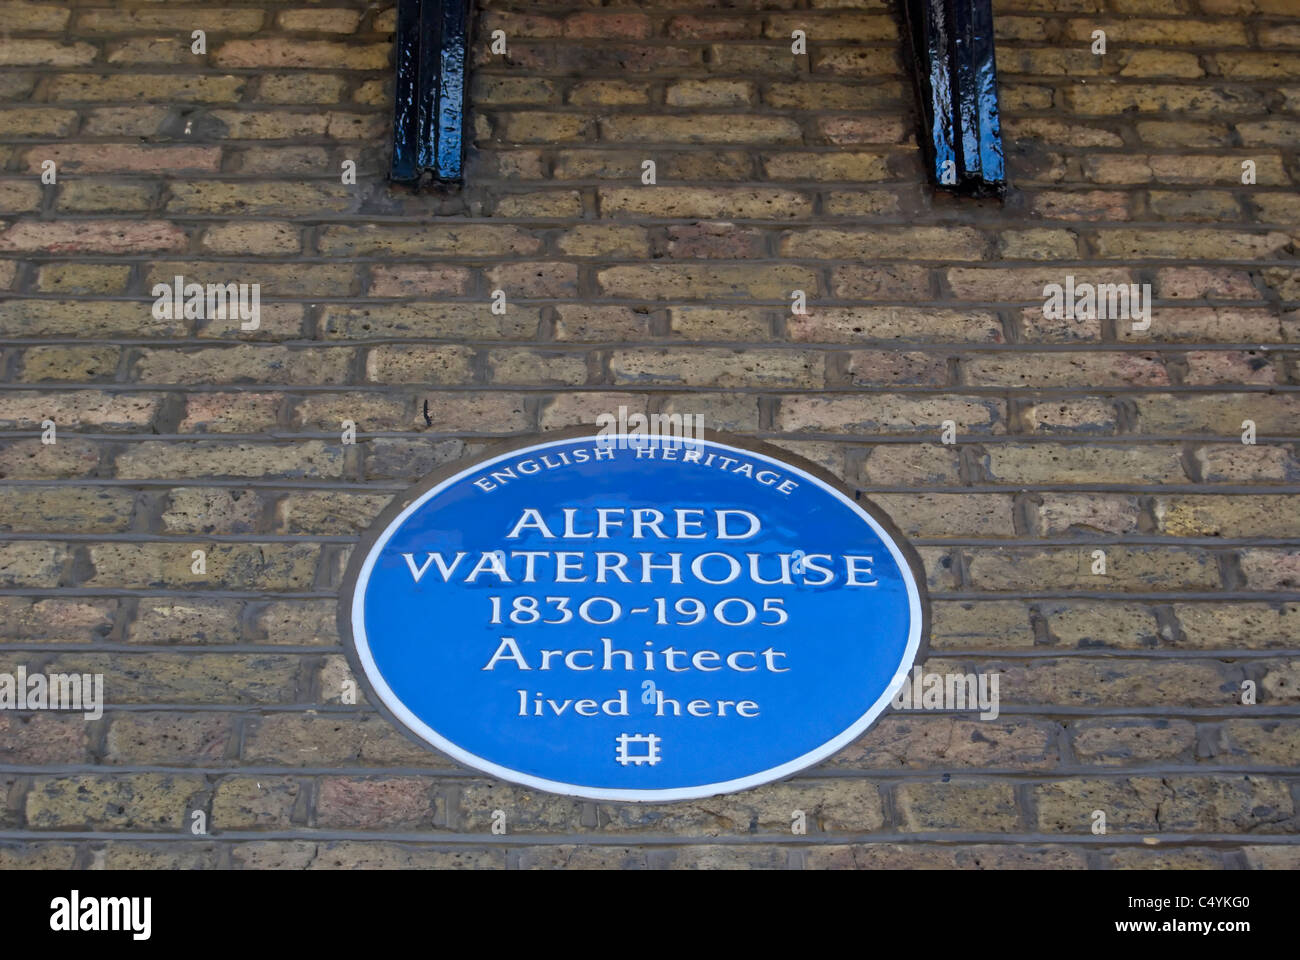 english heritage blue plaque marking a home of architect alfred waterhouse, marylebone, london, england Stock Photo